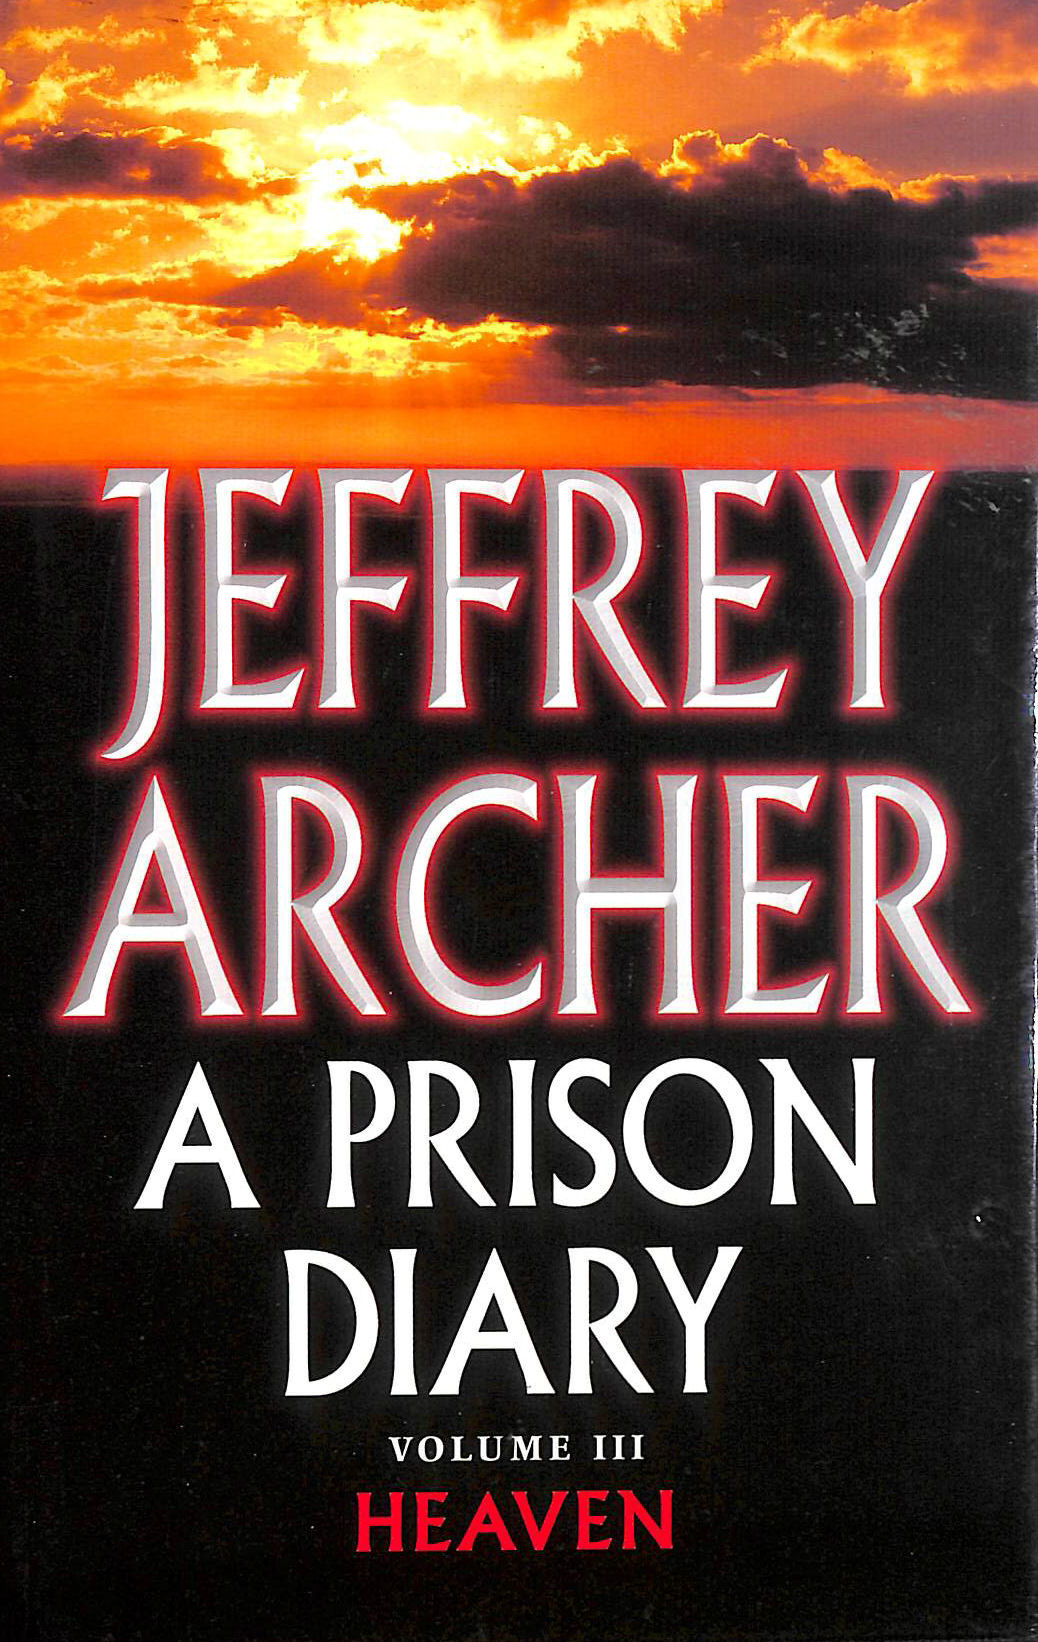 ARCHER, JEFFREY - A Prison Diary Volume III: Heaven (The Prison Diaries, 3)